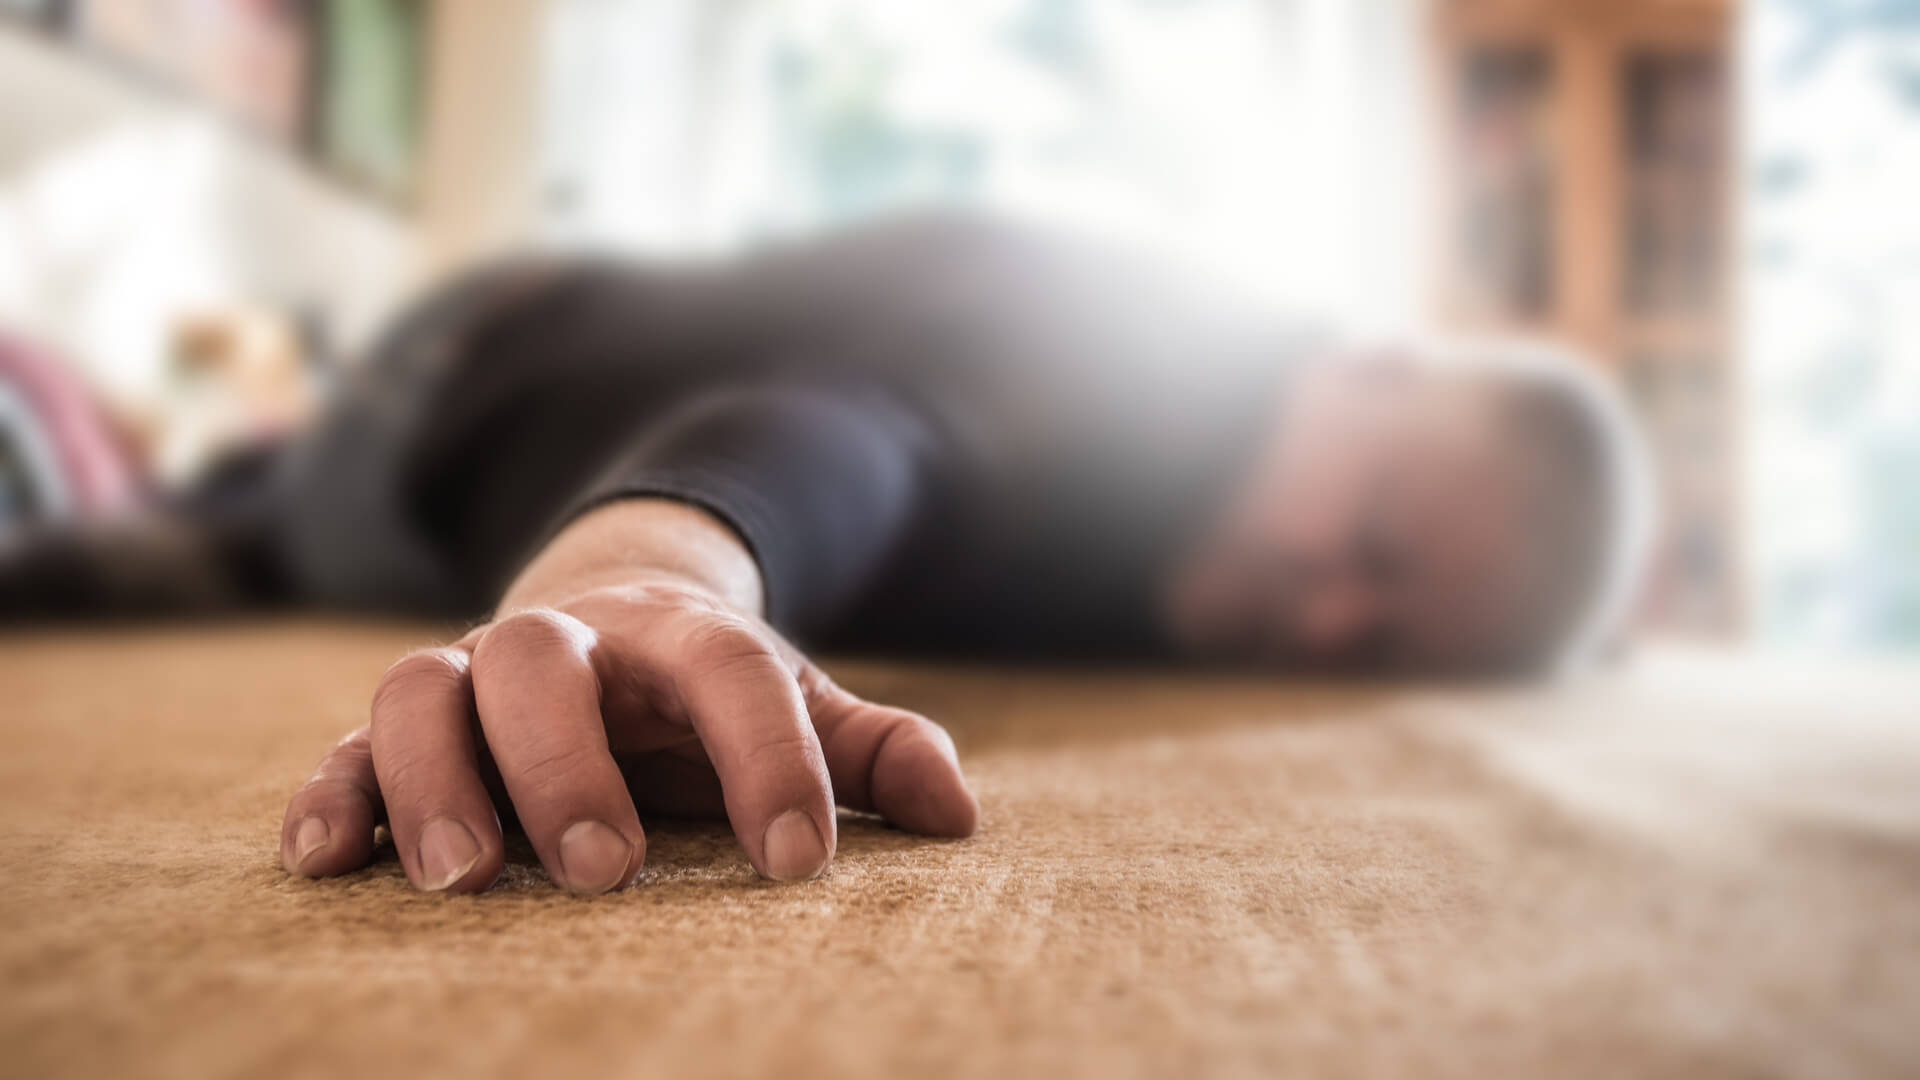 A man lies unconscious in his apartment